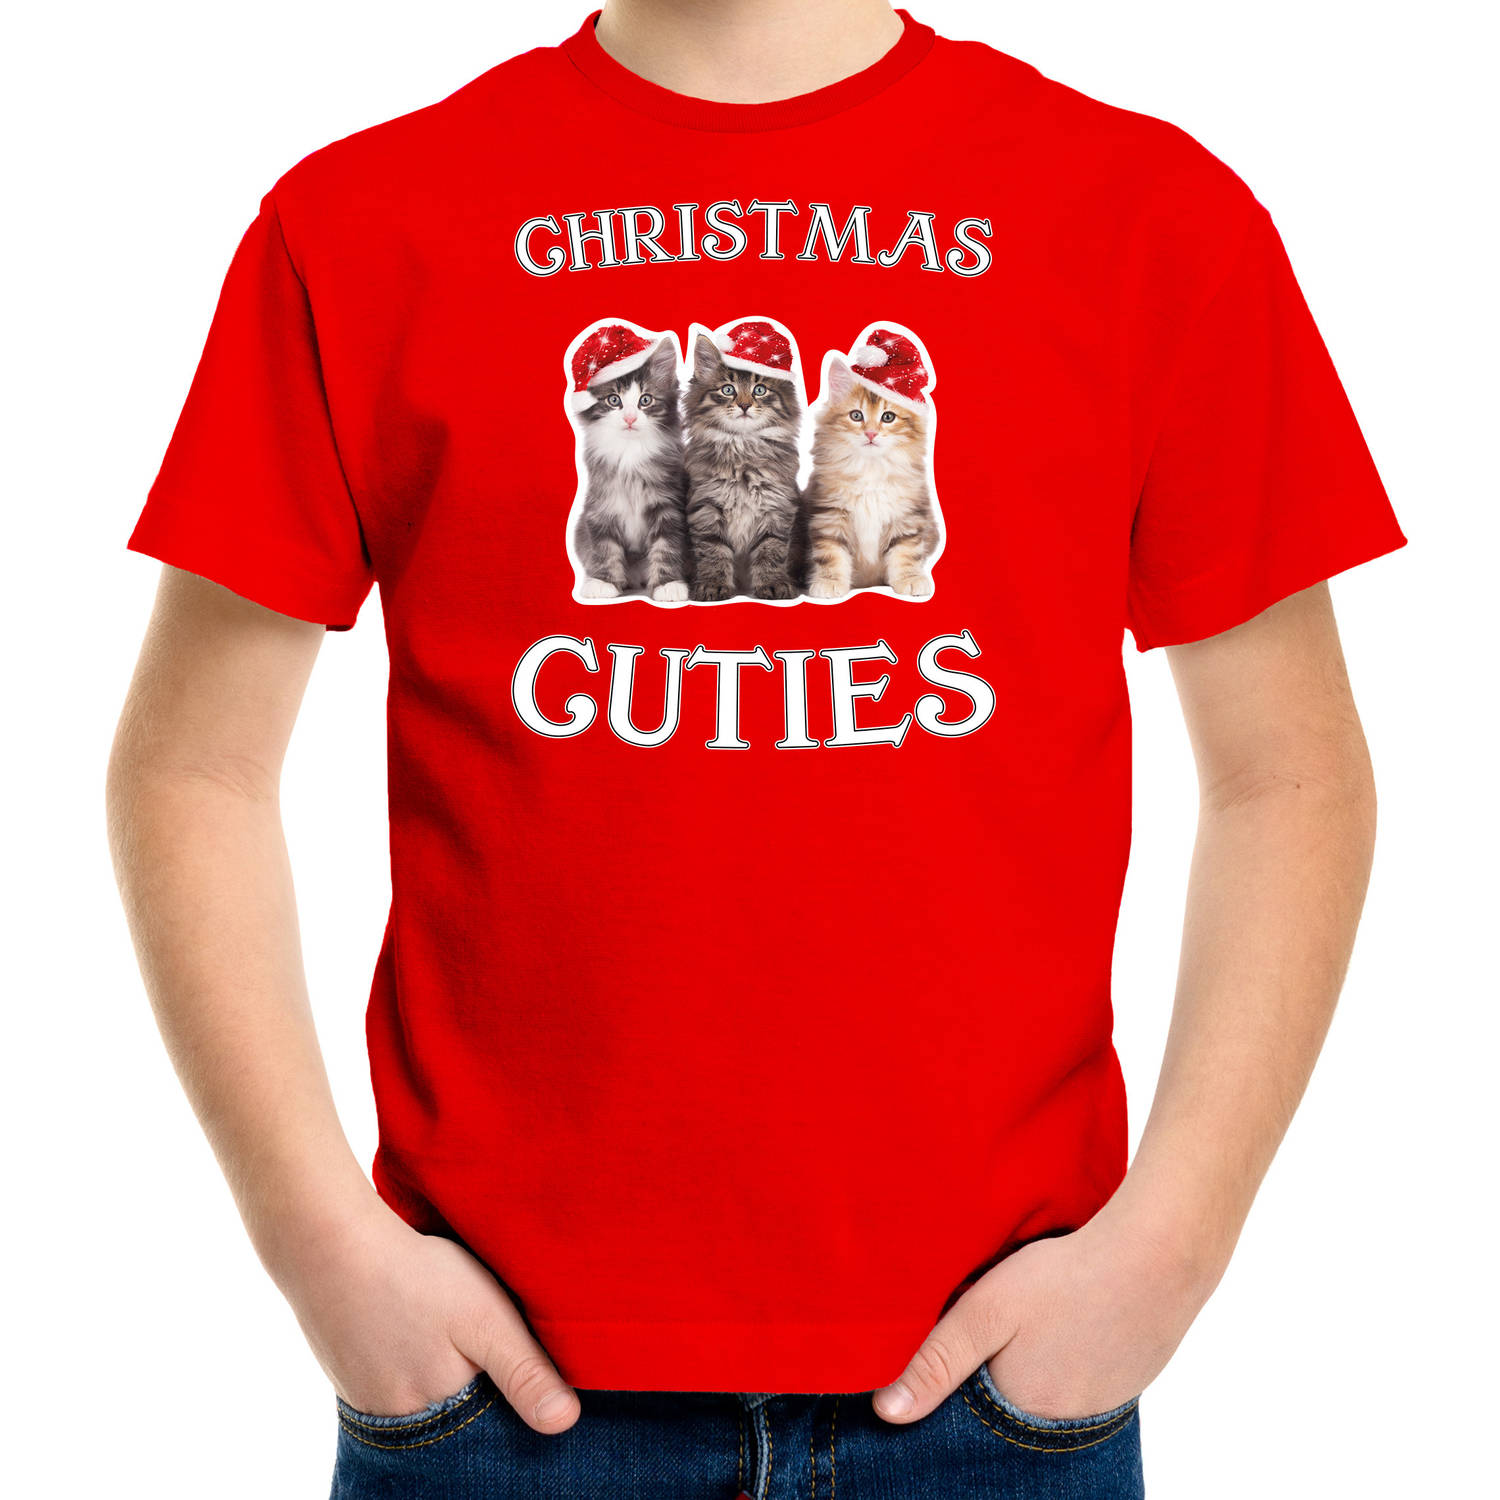 Rood Kerstshirt / Kerstkleding Christmas cuties voor kinderen S (110-116) - kerst t-shirts kind